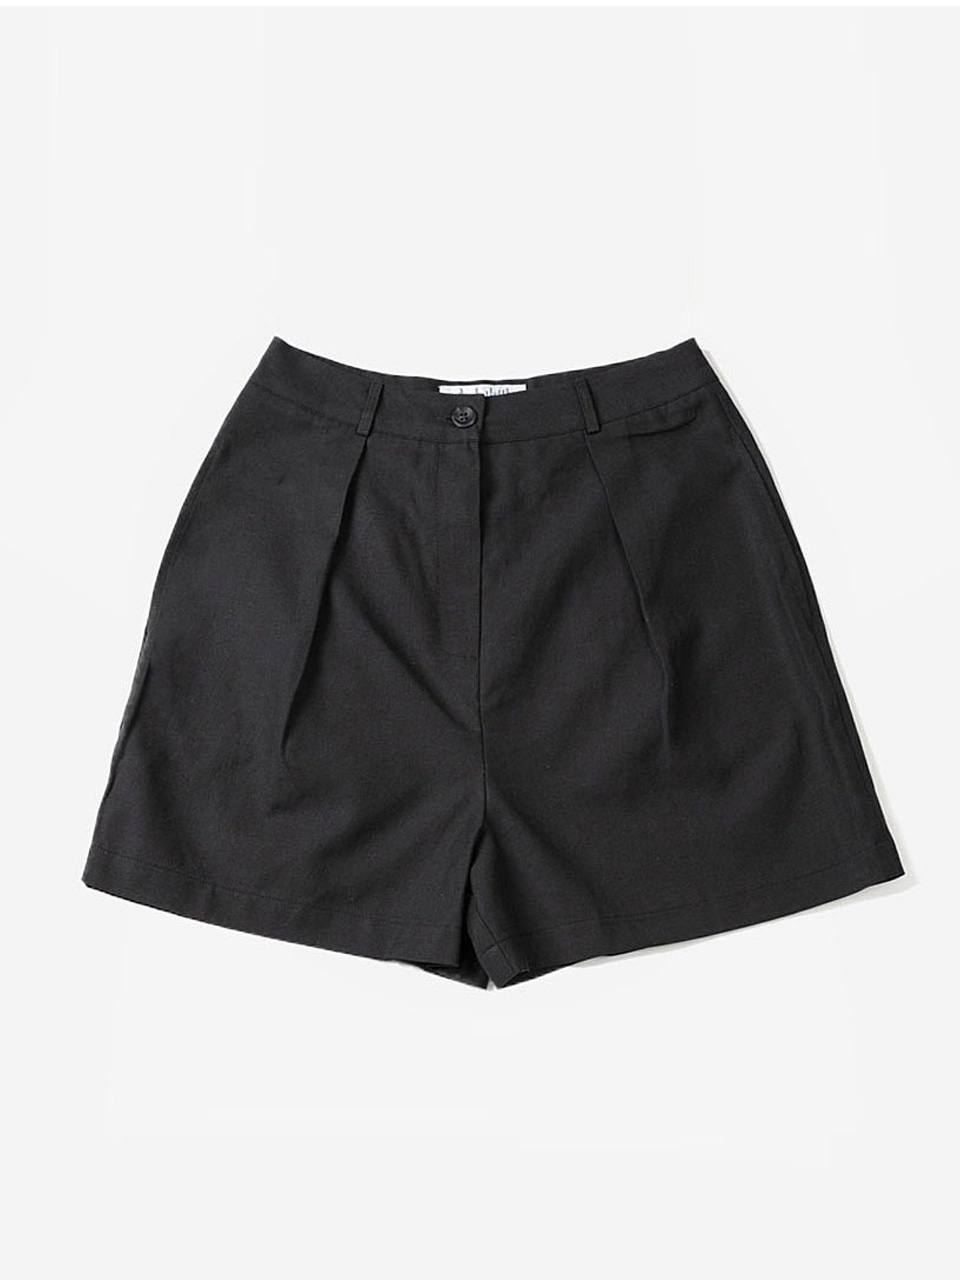 standard shorts - washed blackBRENDA BRENDEN